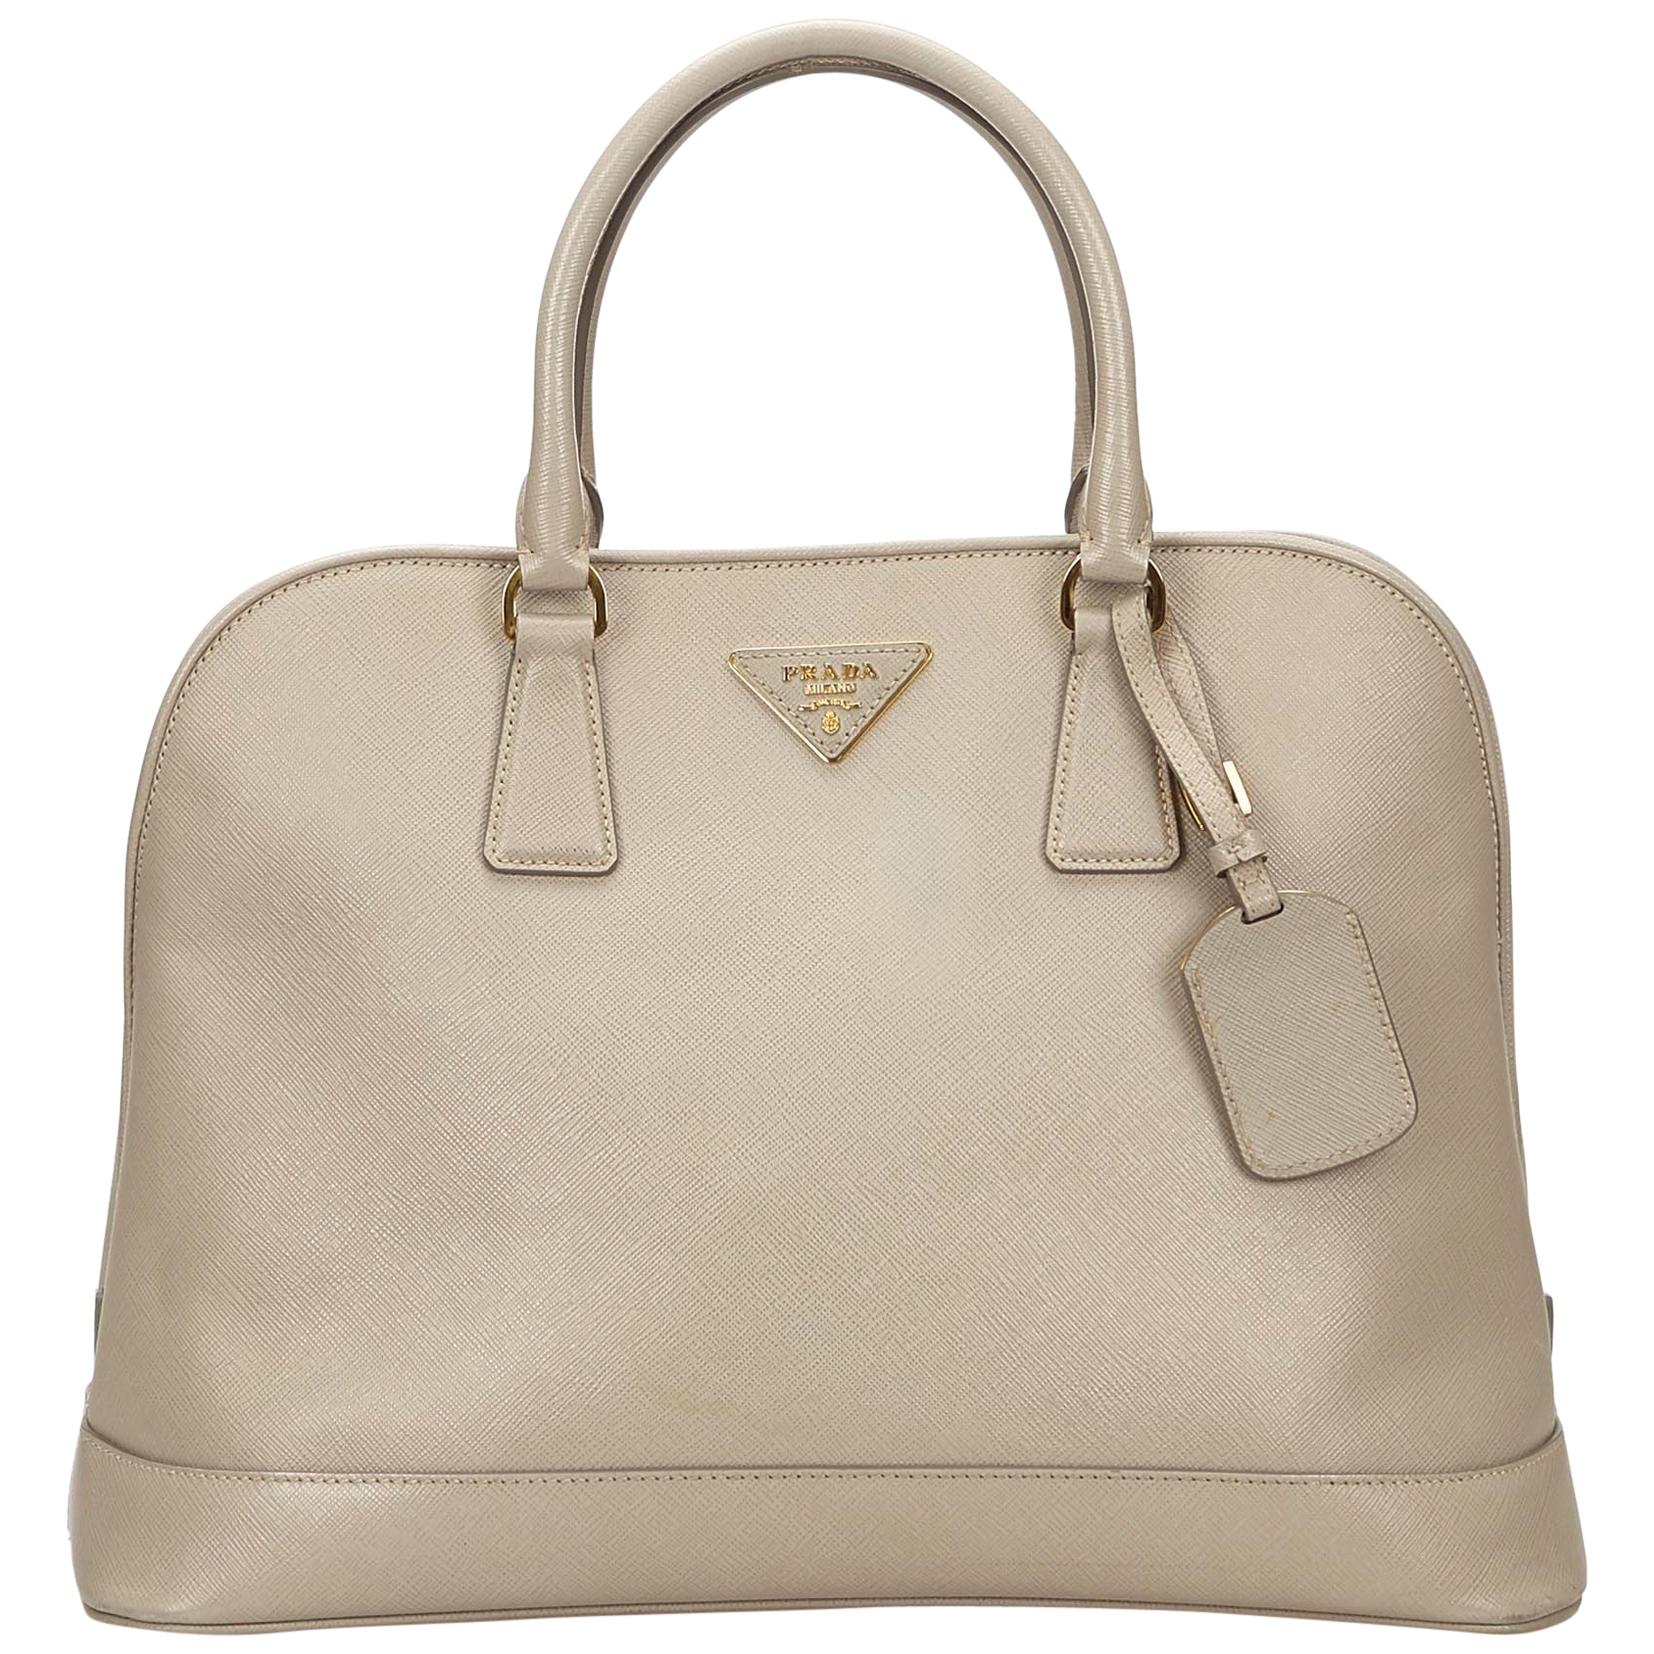 Prada Brown x Beige Saffiano Leather Handbag For Sale